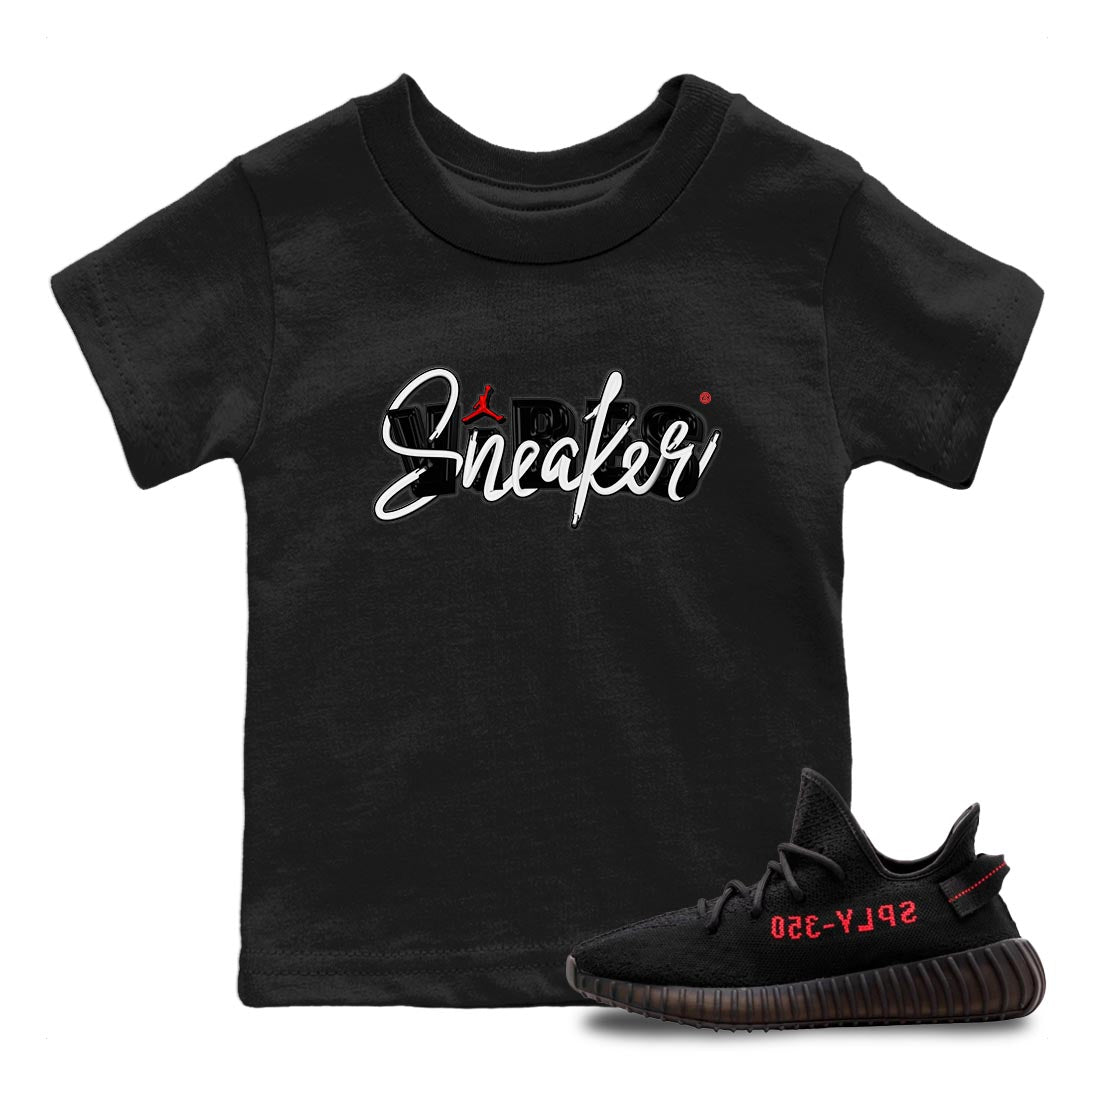 Yeezy 350 Bred shirt to match jordans Sneaker Vibes Streetwear Sneaker Shirt Yeezy Boost 350 V2 Bred Drip Gear Zone Sneaker Matching Clothing Baby Toddler Black 1 T-Shirt